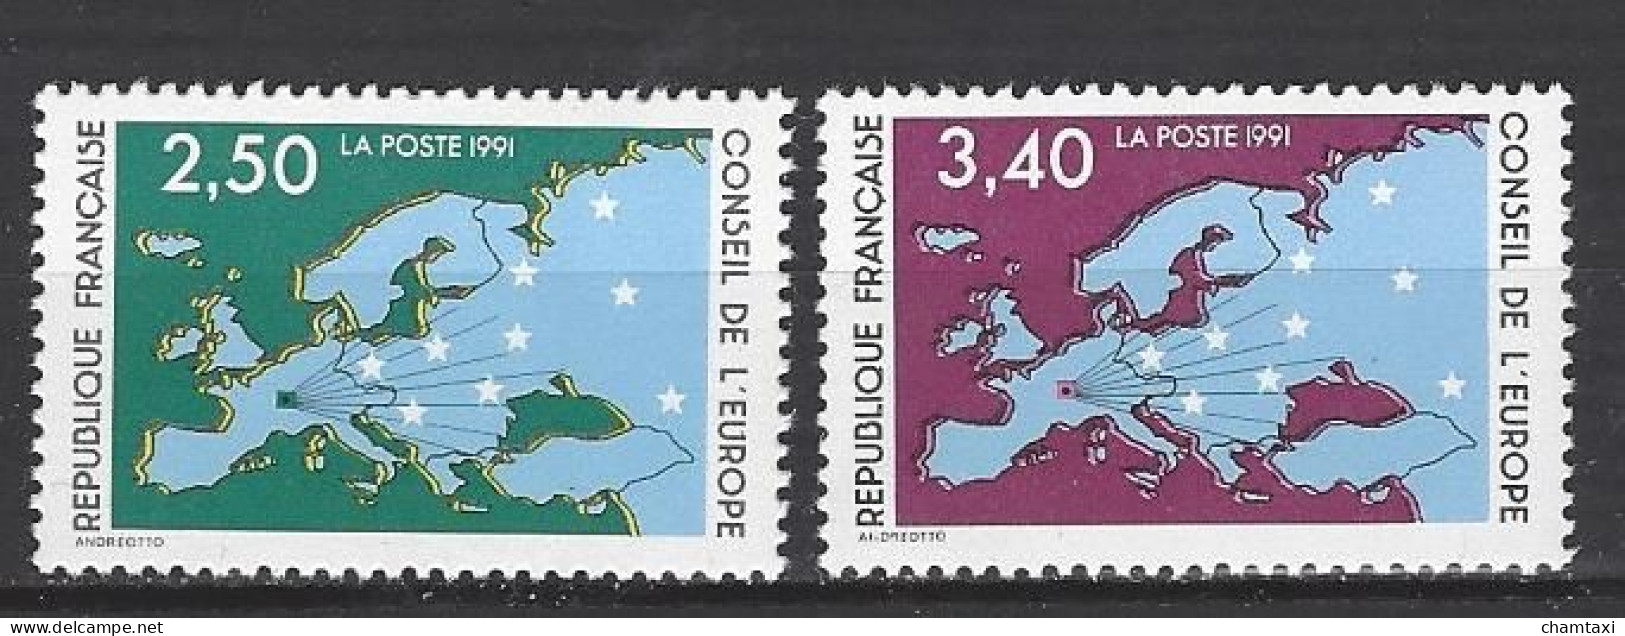 CONSEIL DE L EUROPE 1991 TIMBRE SERVICE 106 107 CARTE D EUROPE ET ETOILES - Ongebruikt